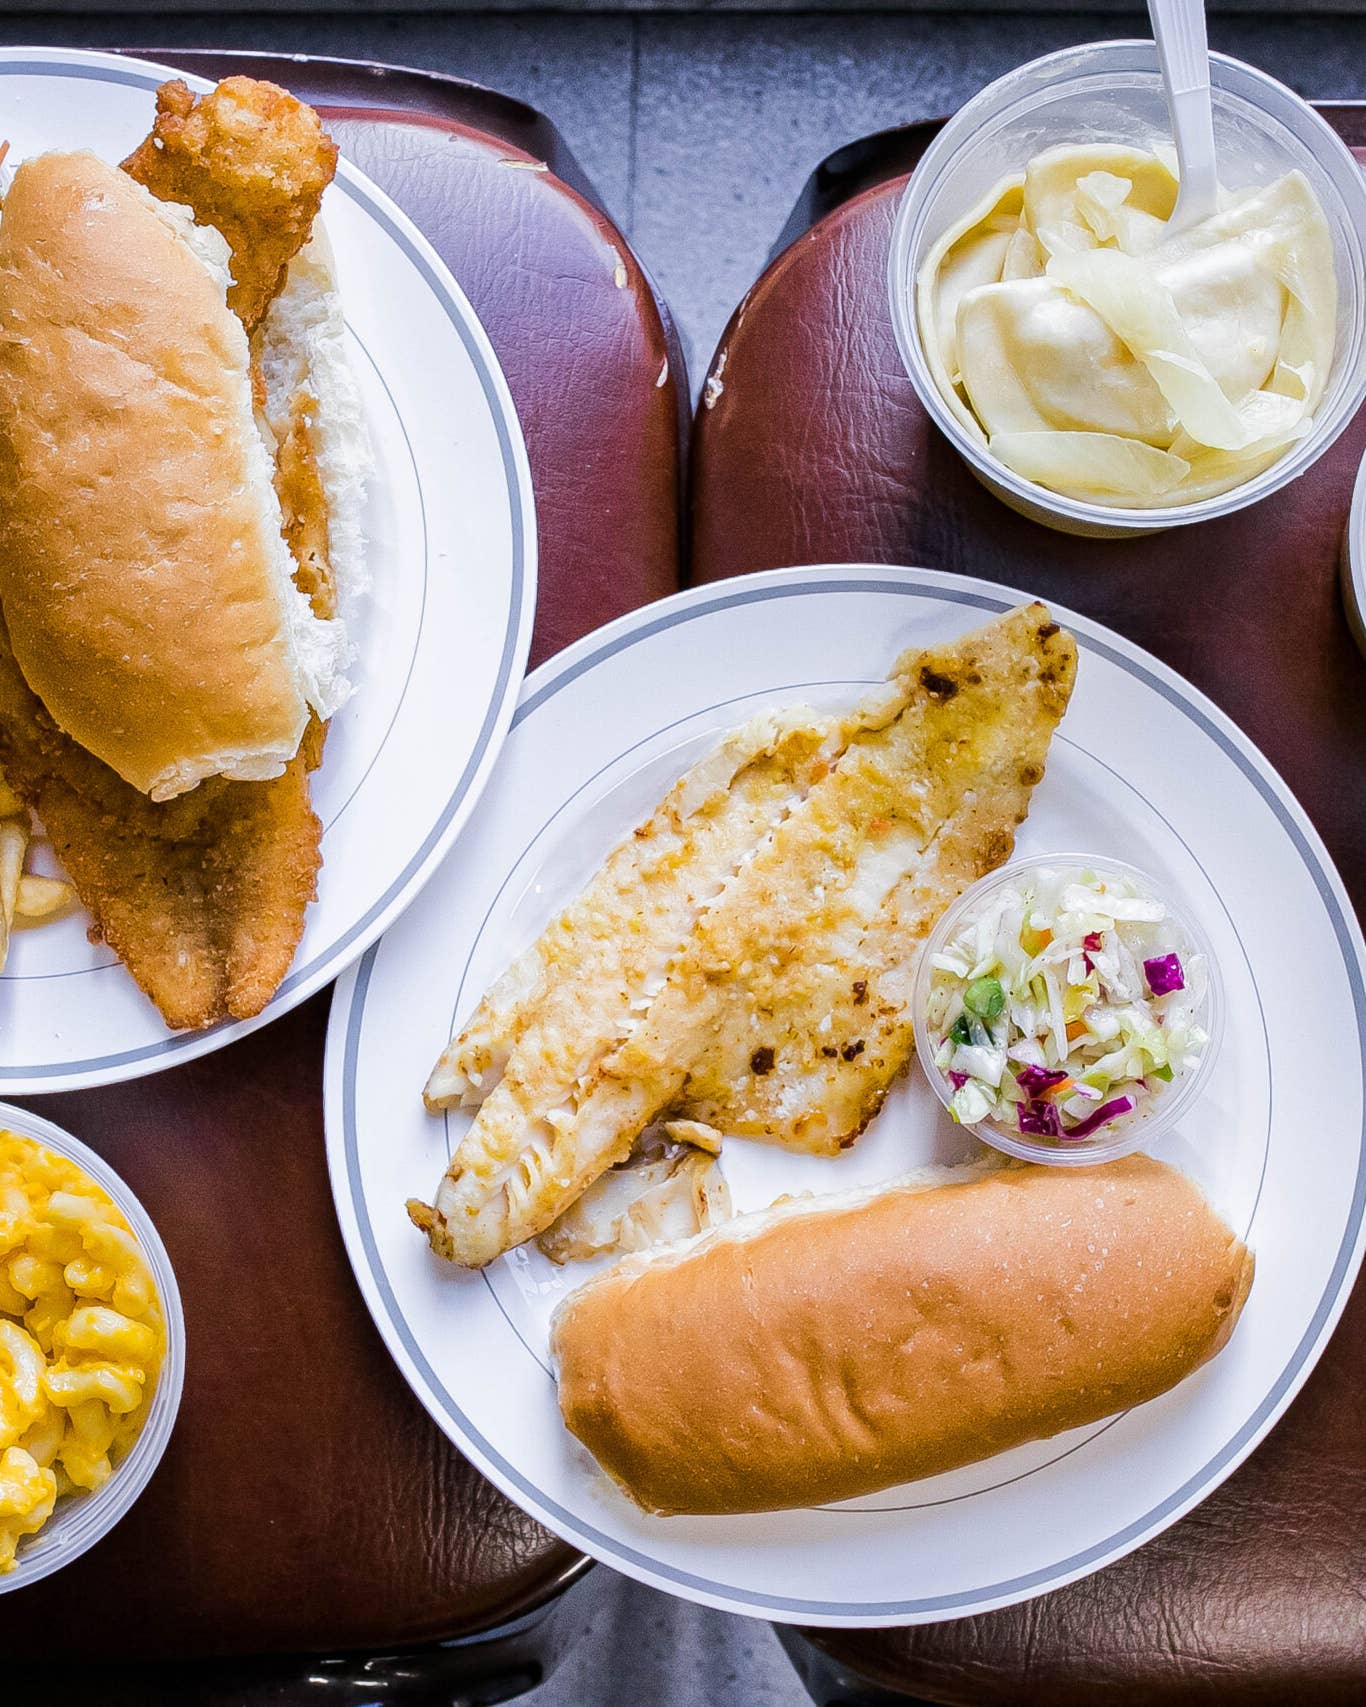 Lent Heralds the Return of Pittsburgh’s Glorious Fish Fry Season